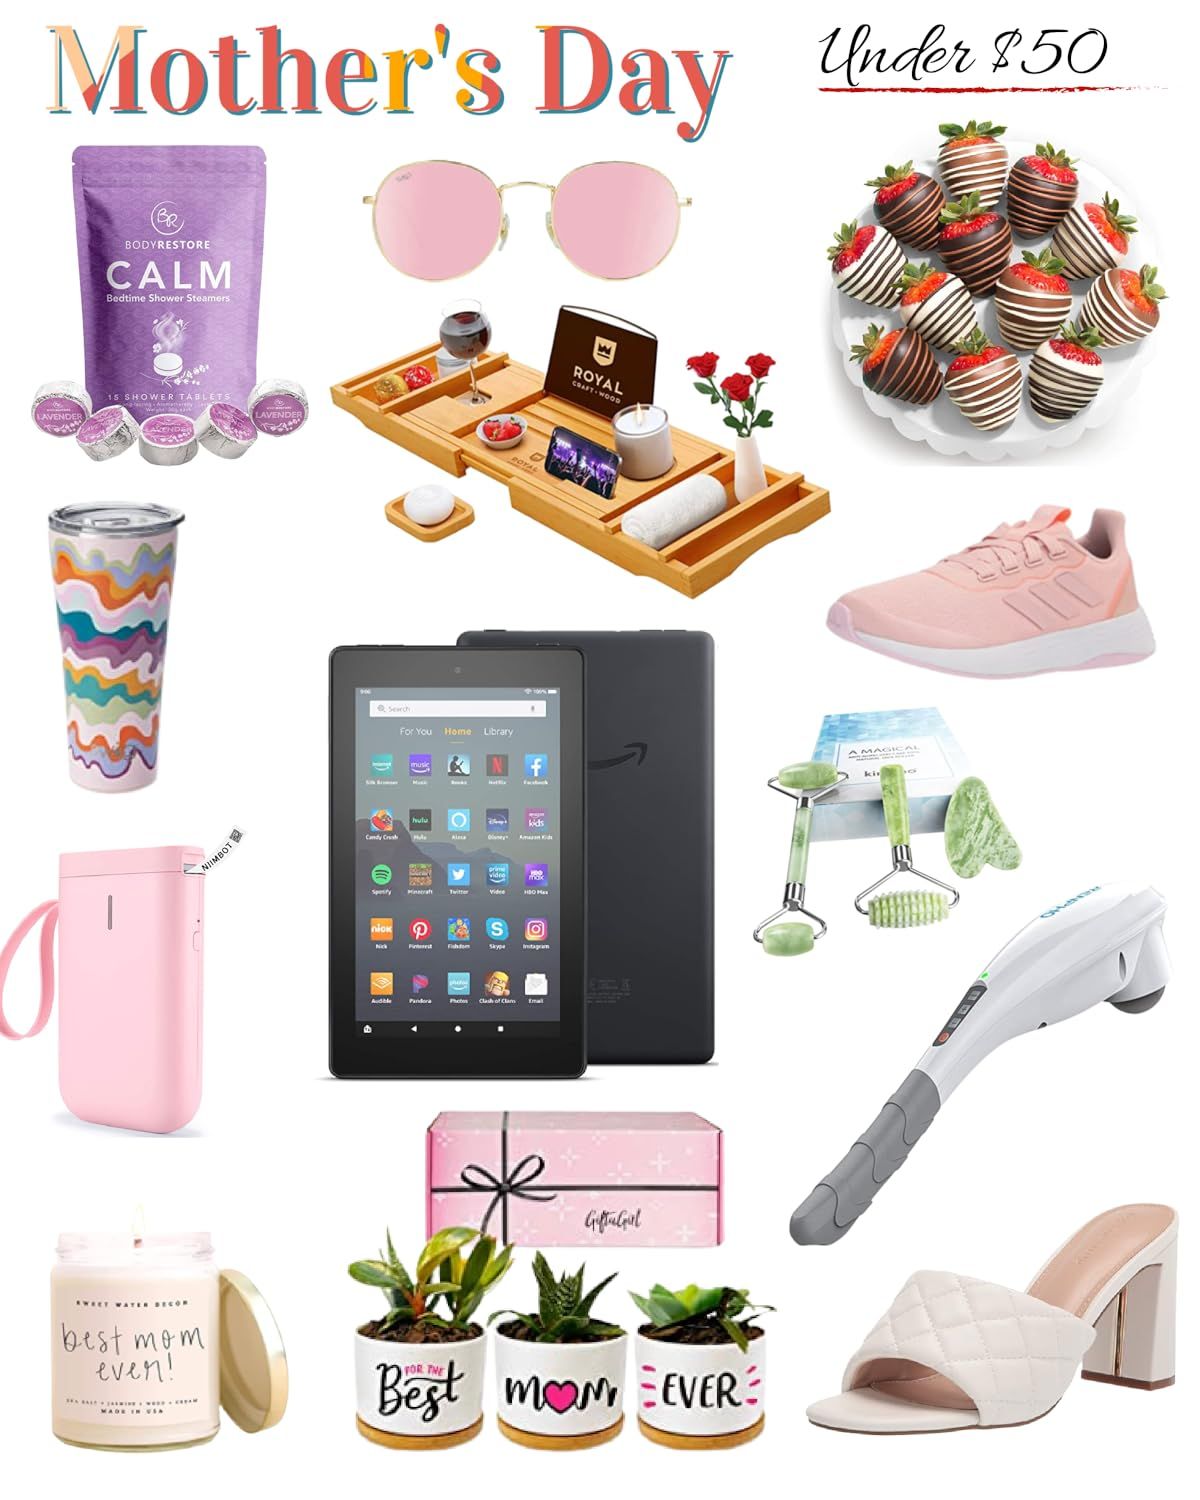 Mother's Day Gift Ideas #FoundItOnAmazon #AmazonFinds #MothersDay #Giftguide 50 | Amazon (US)